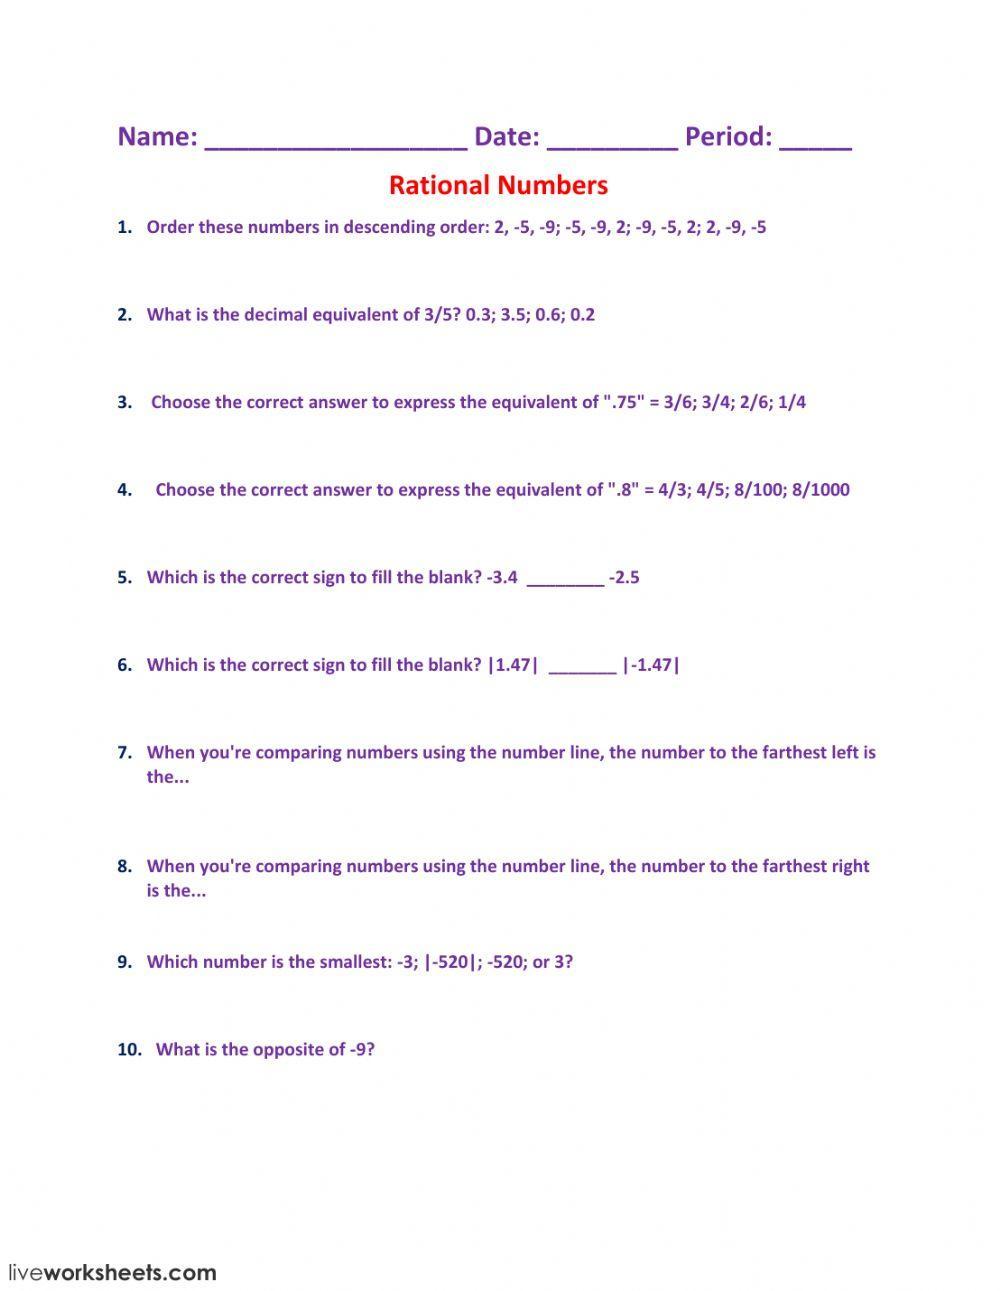 rational-numbers-worksheet-live-worksheets